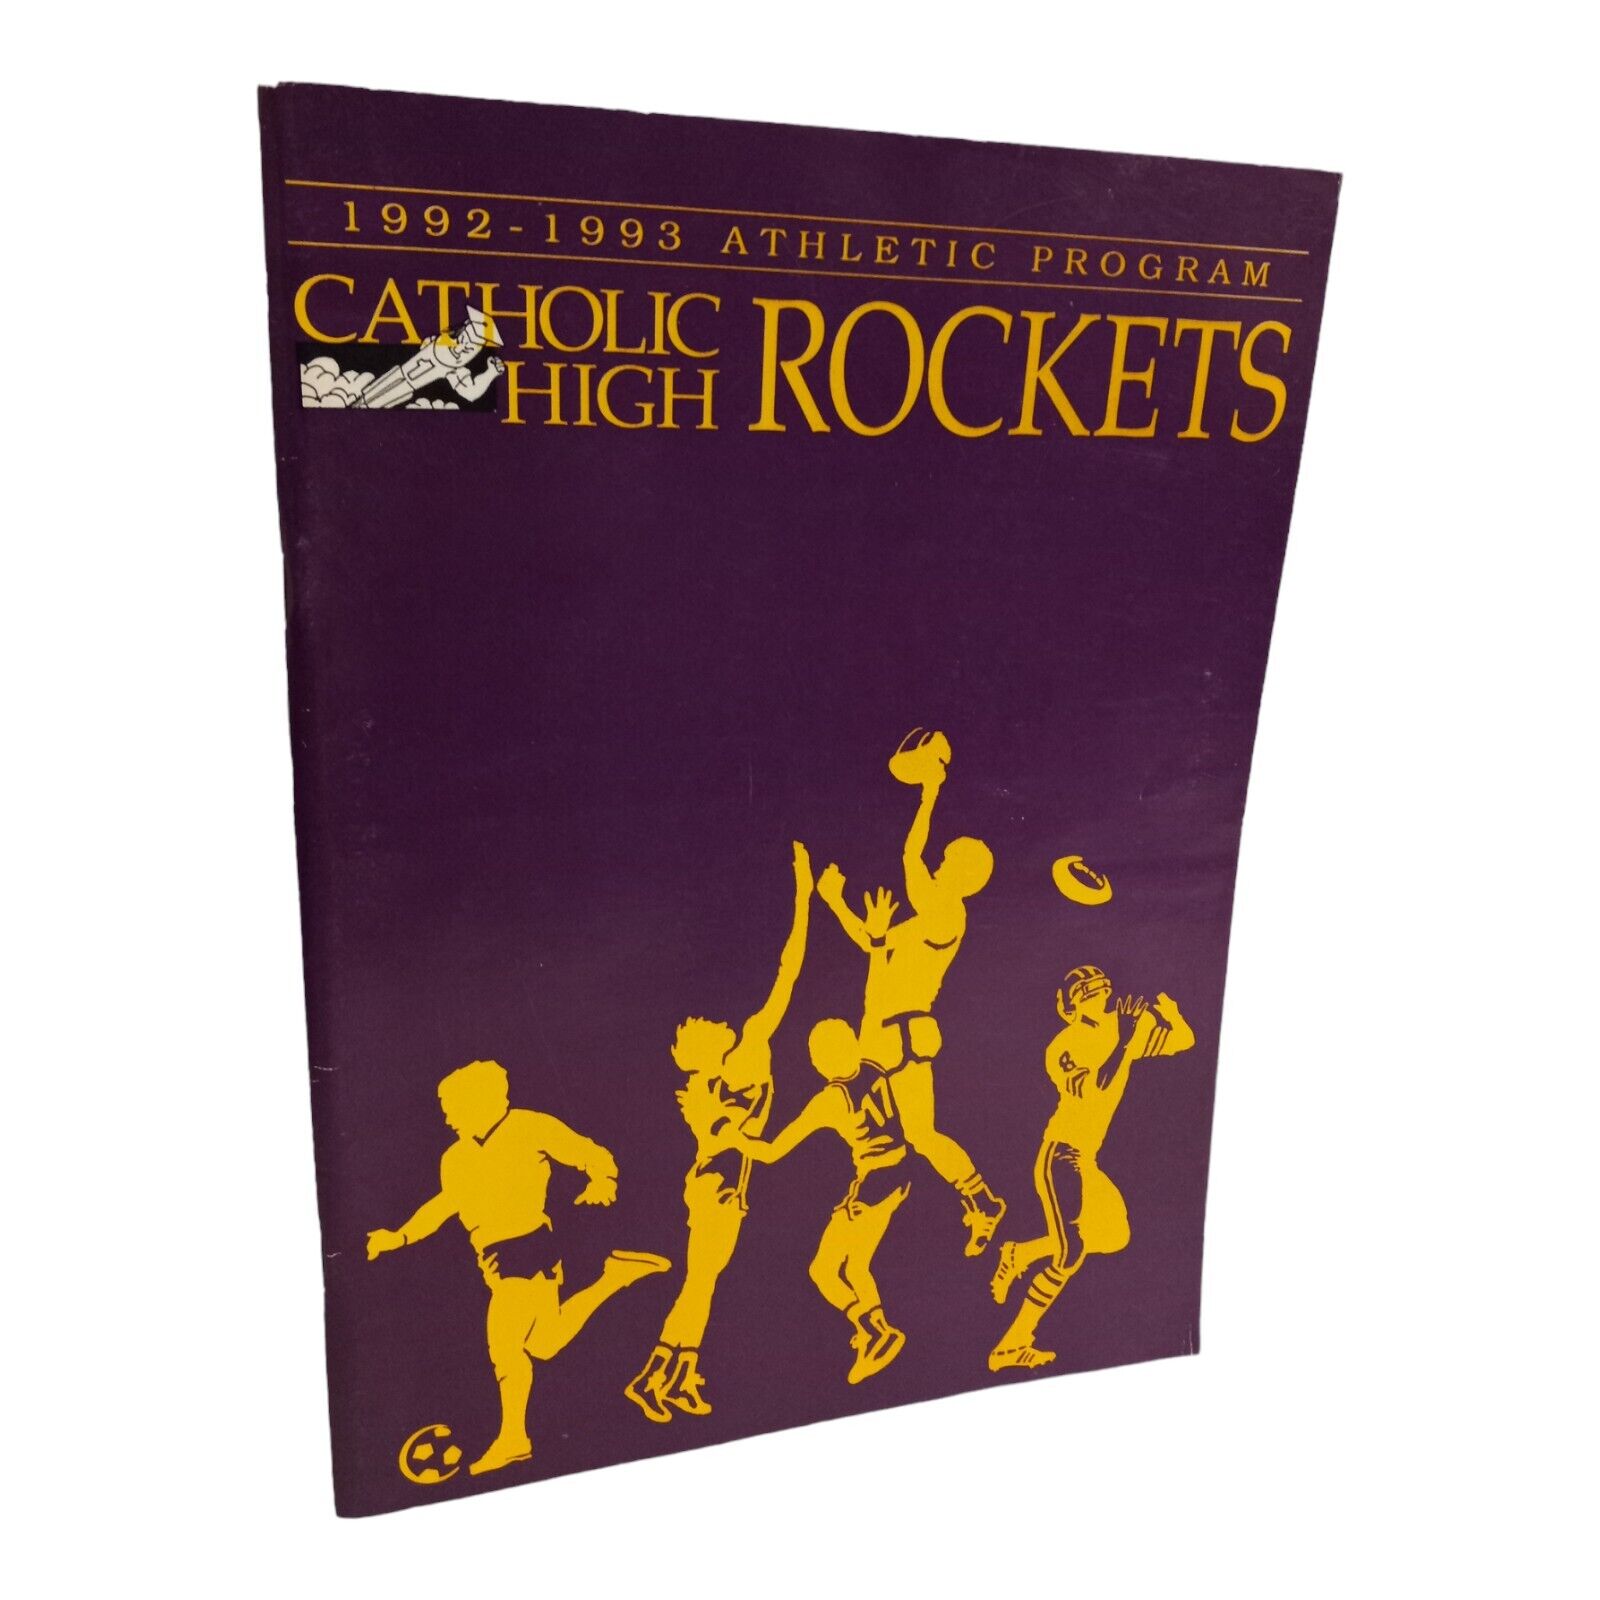 central catholic high school Rockets Athletic Program 1992-93